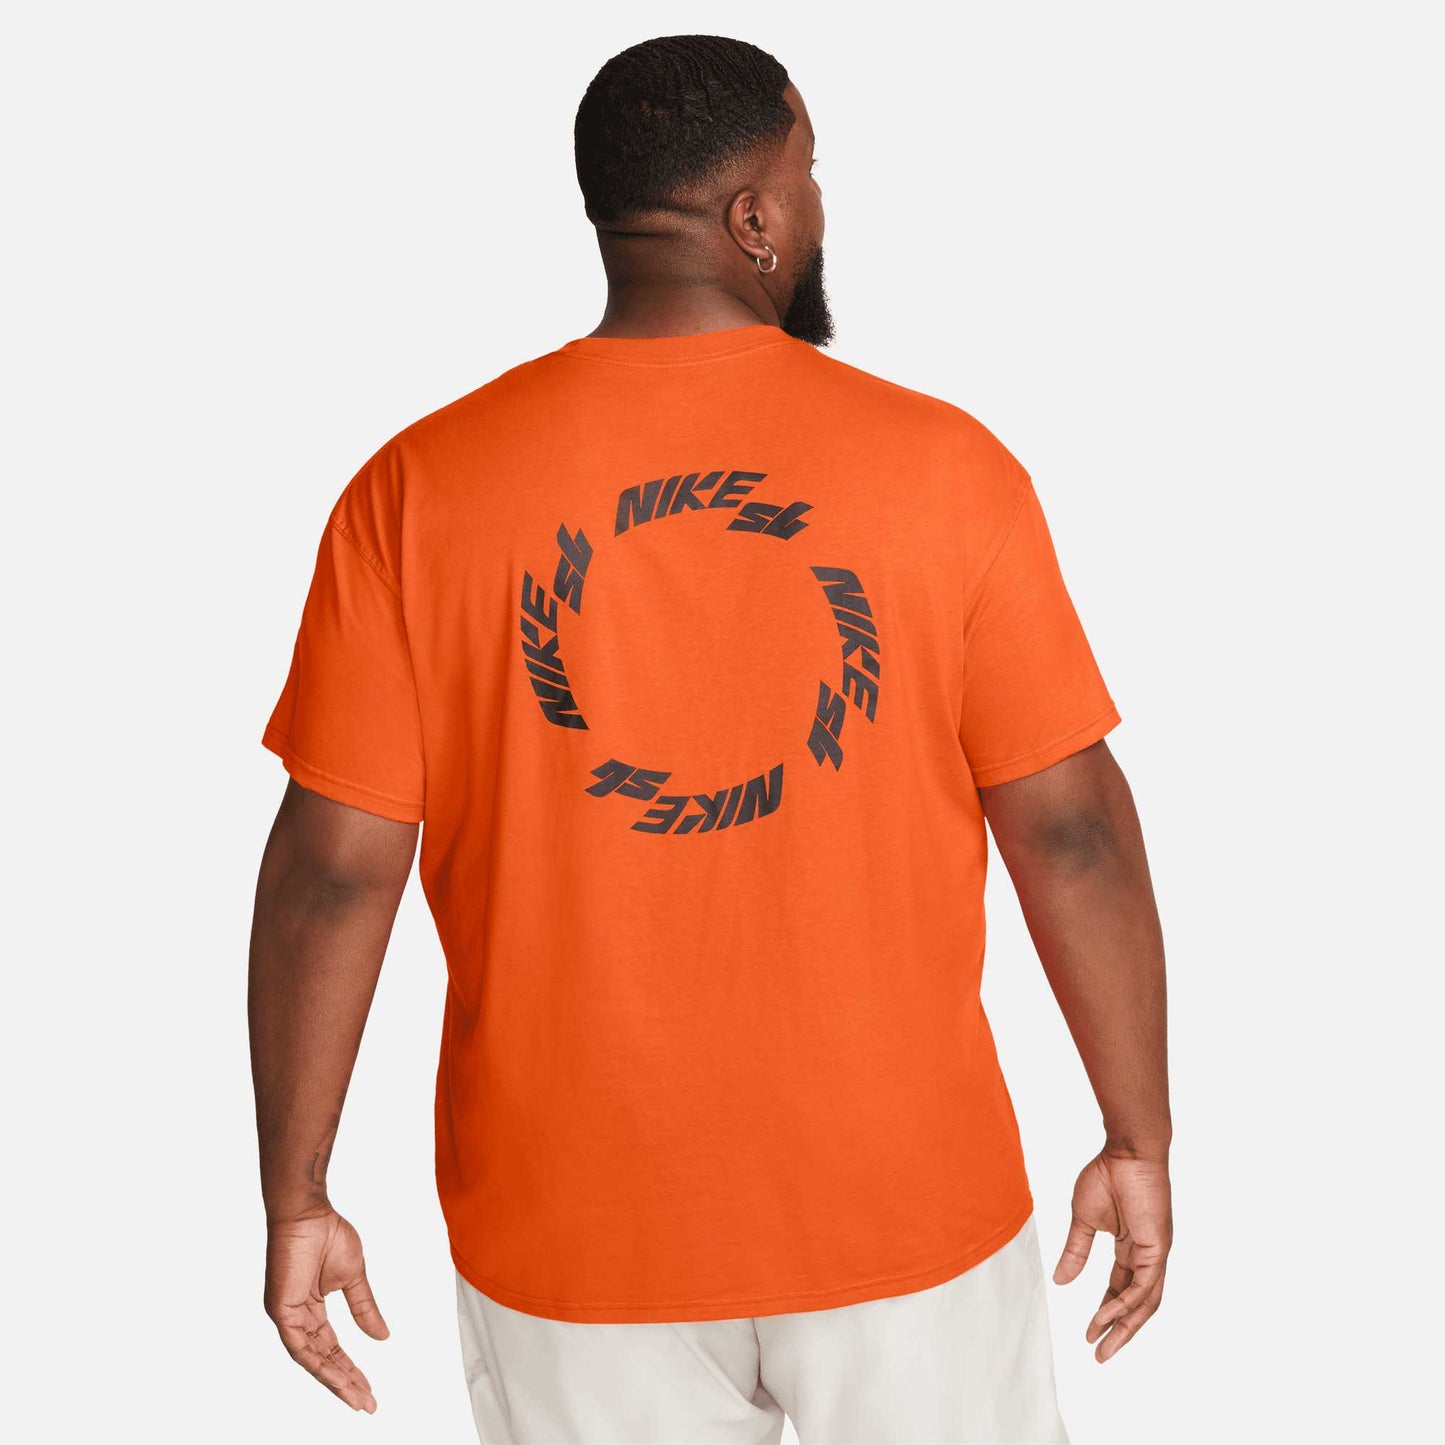 Nike SB Wheel T-Shirt, safety orange - Tiki Room Skateboards - 9